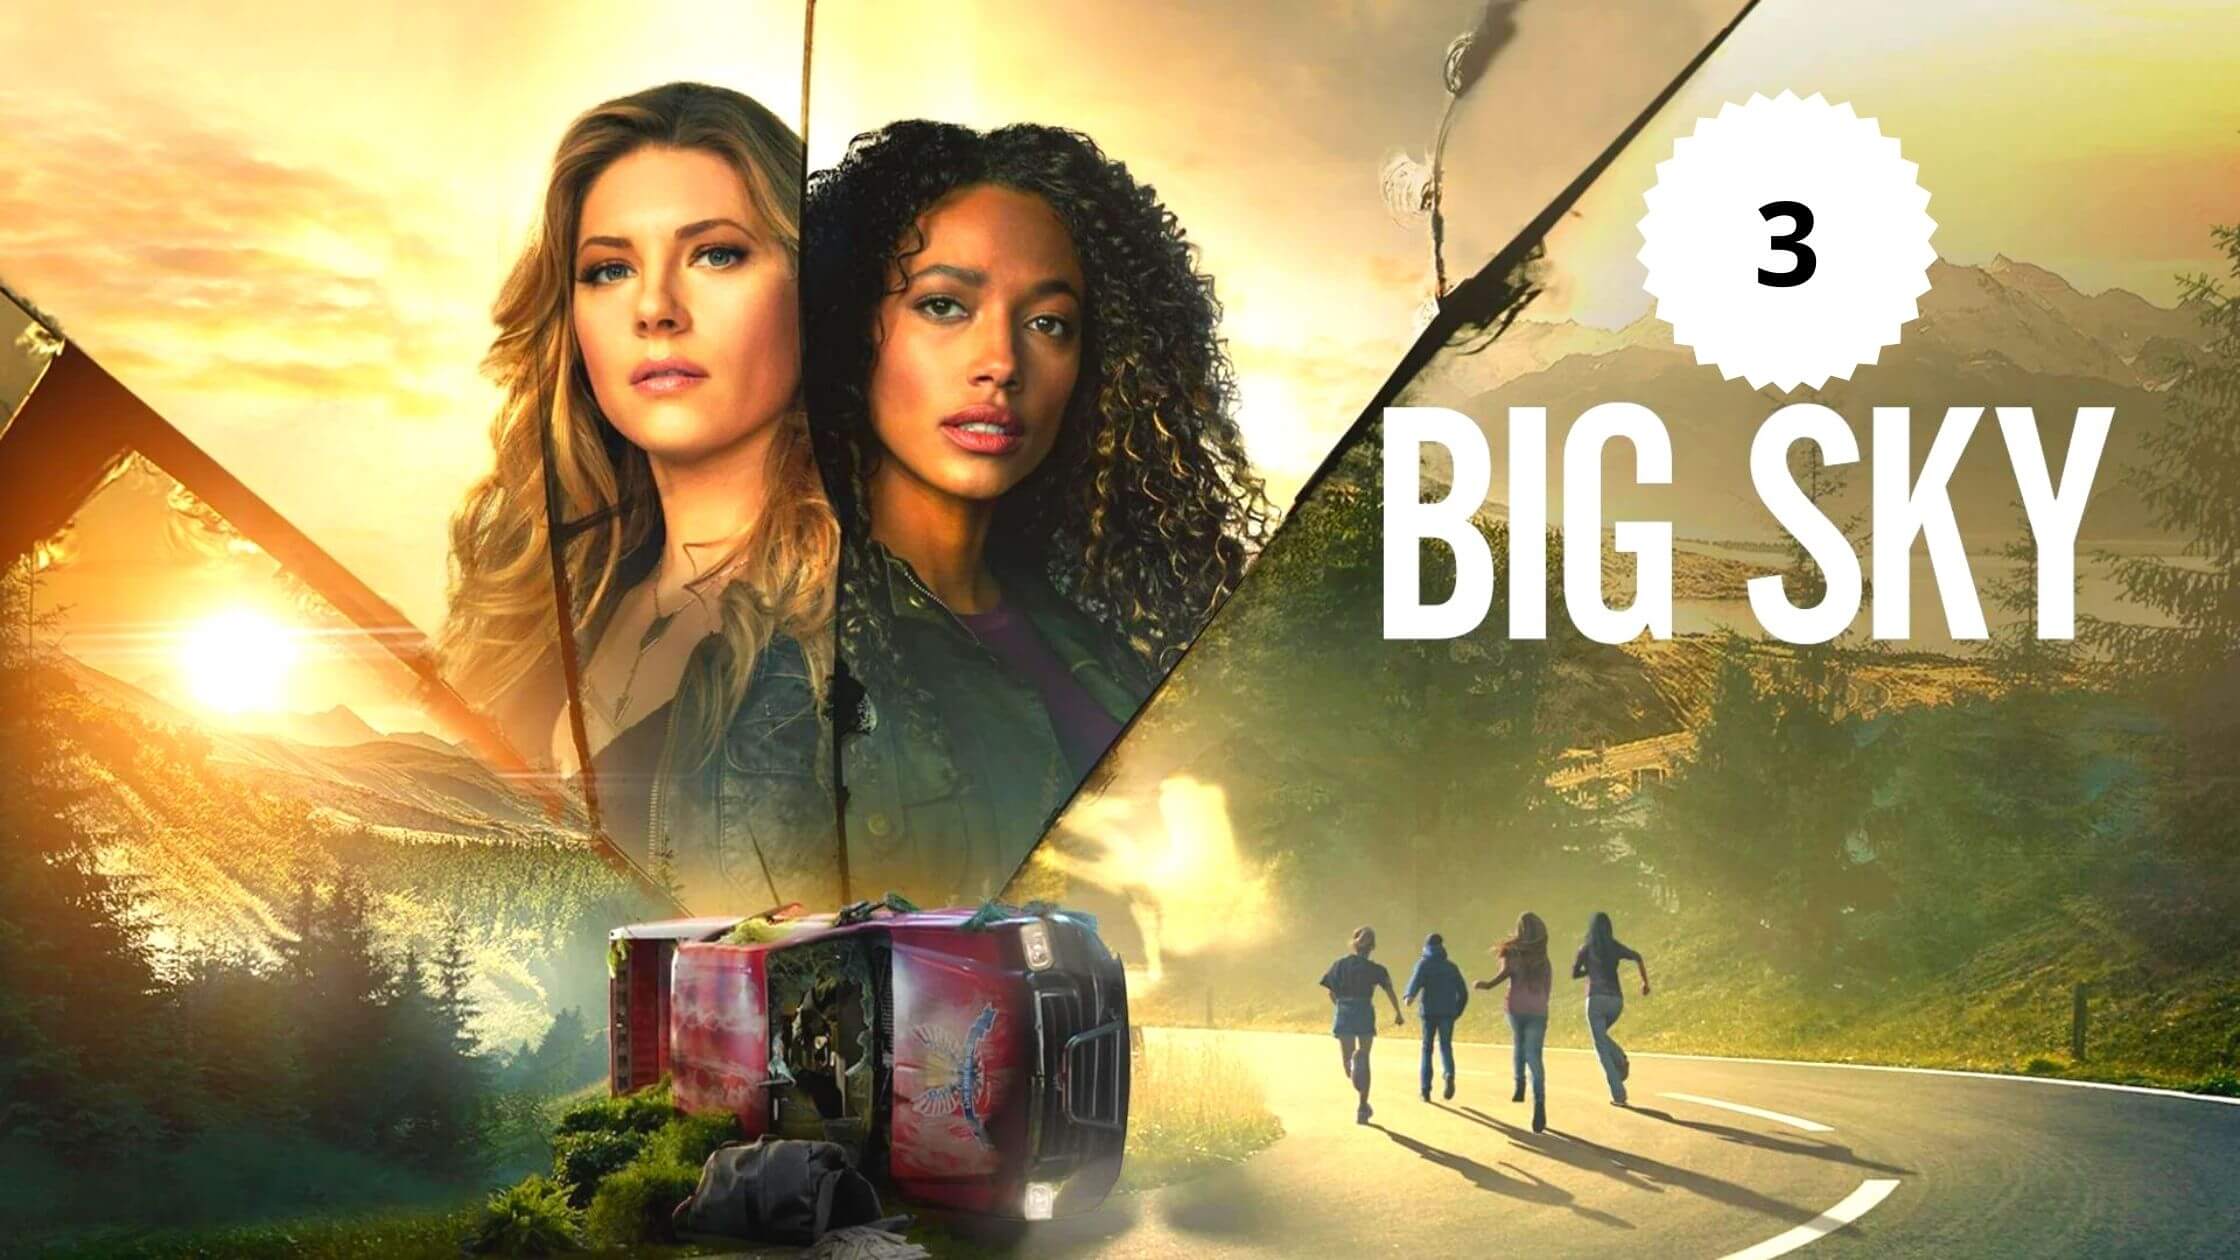 Big Sky season 3, The Release Date